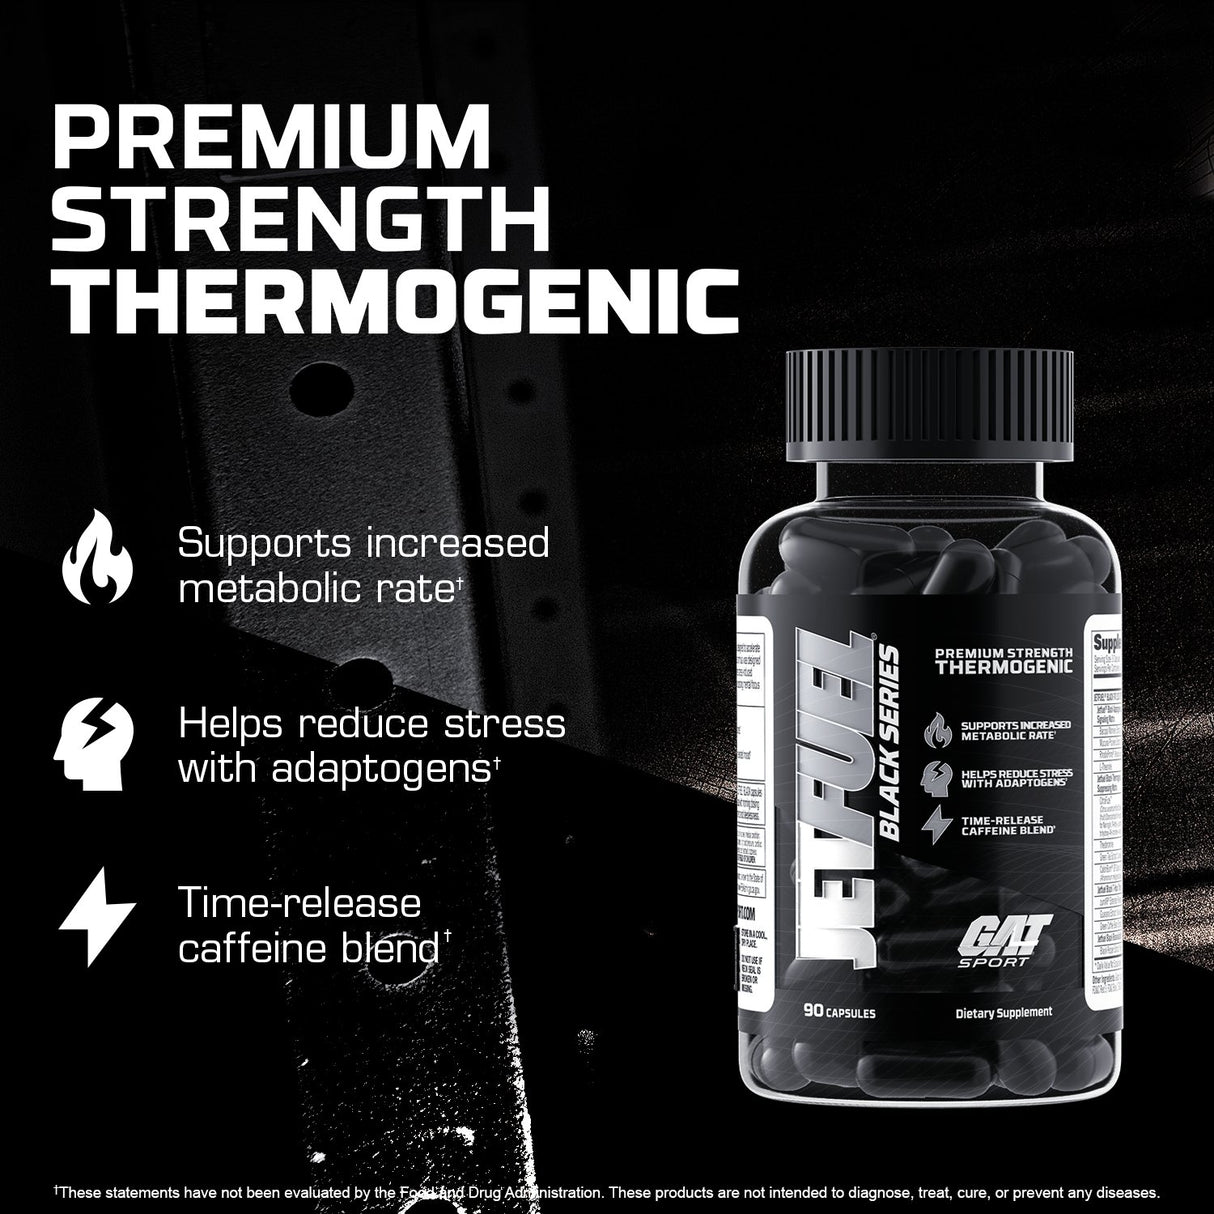 JETFUEL BLACK - premium strength thermogenic